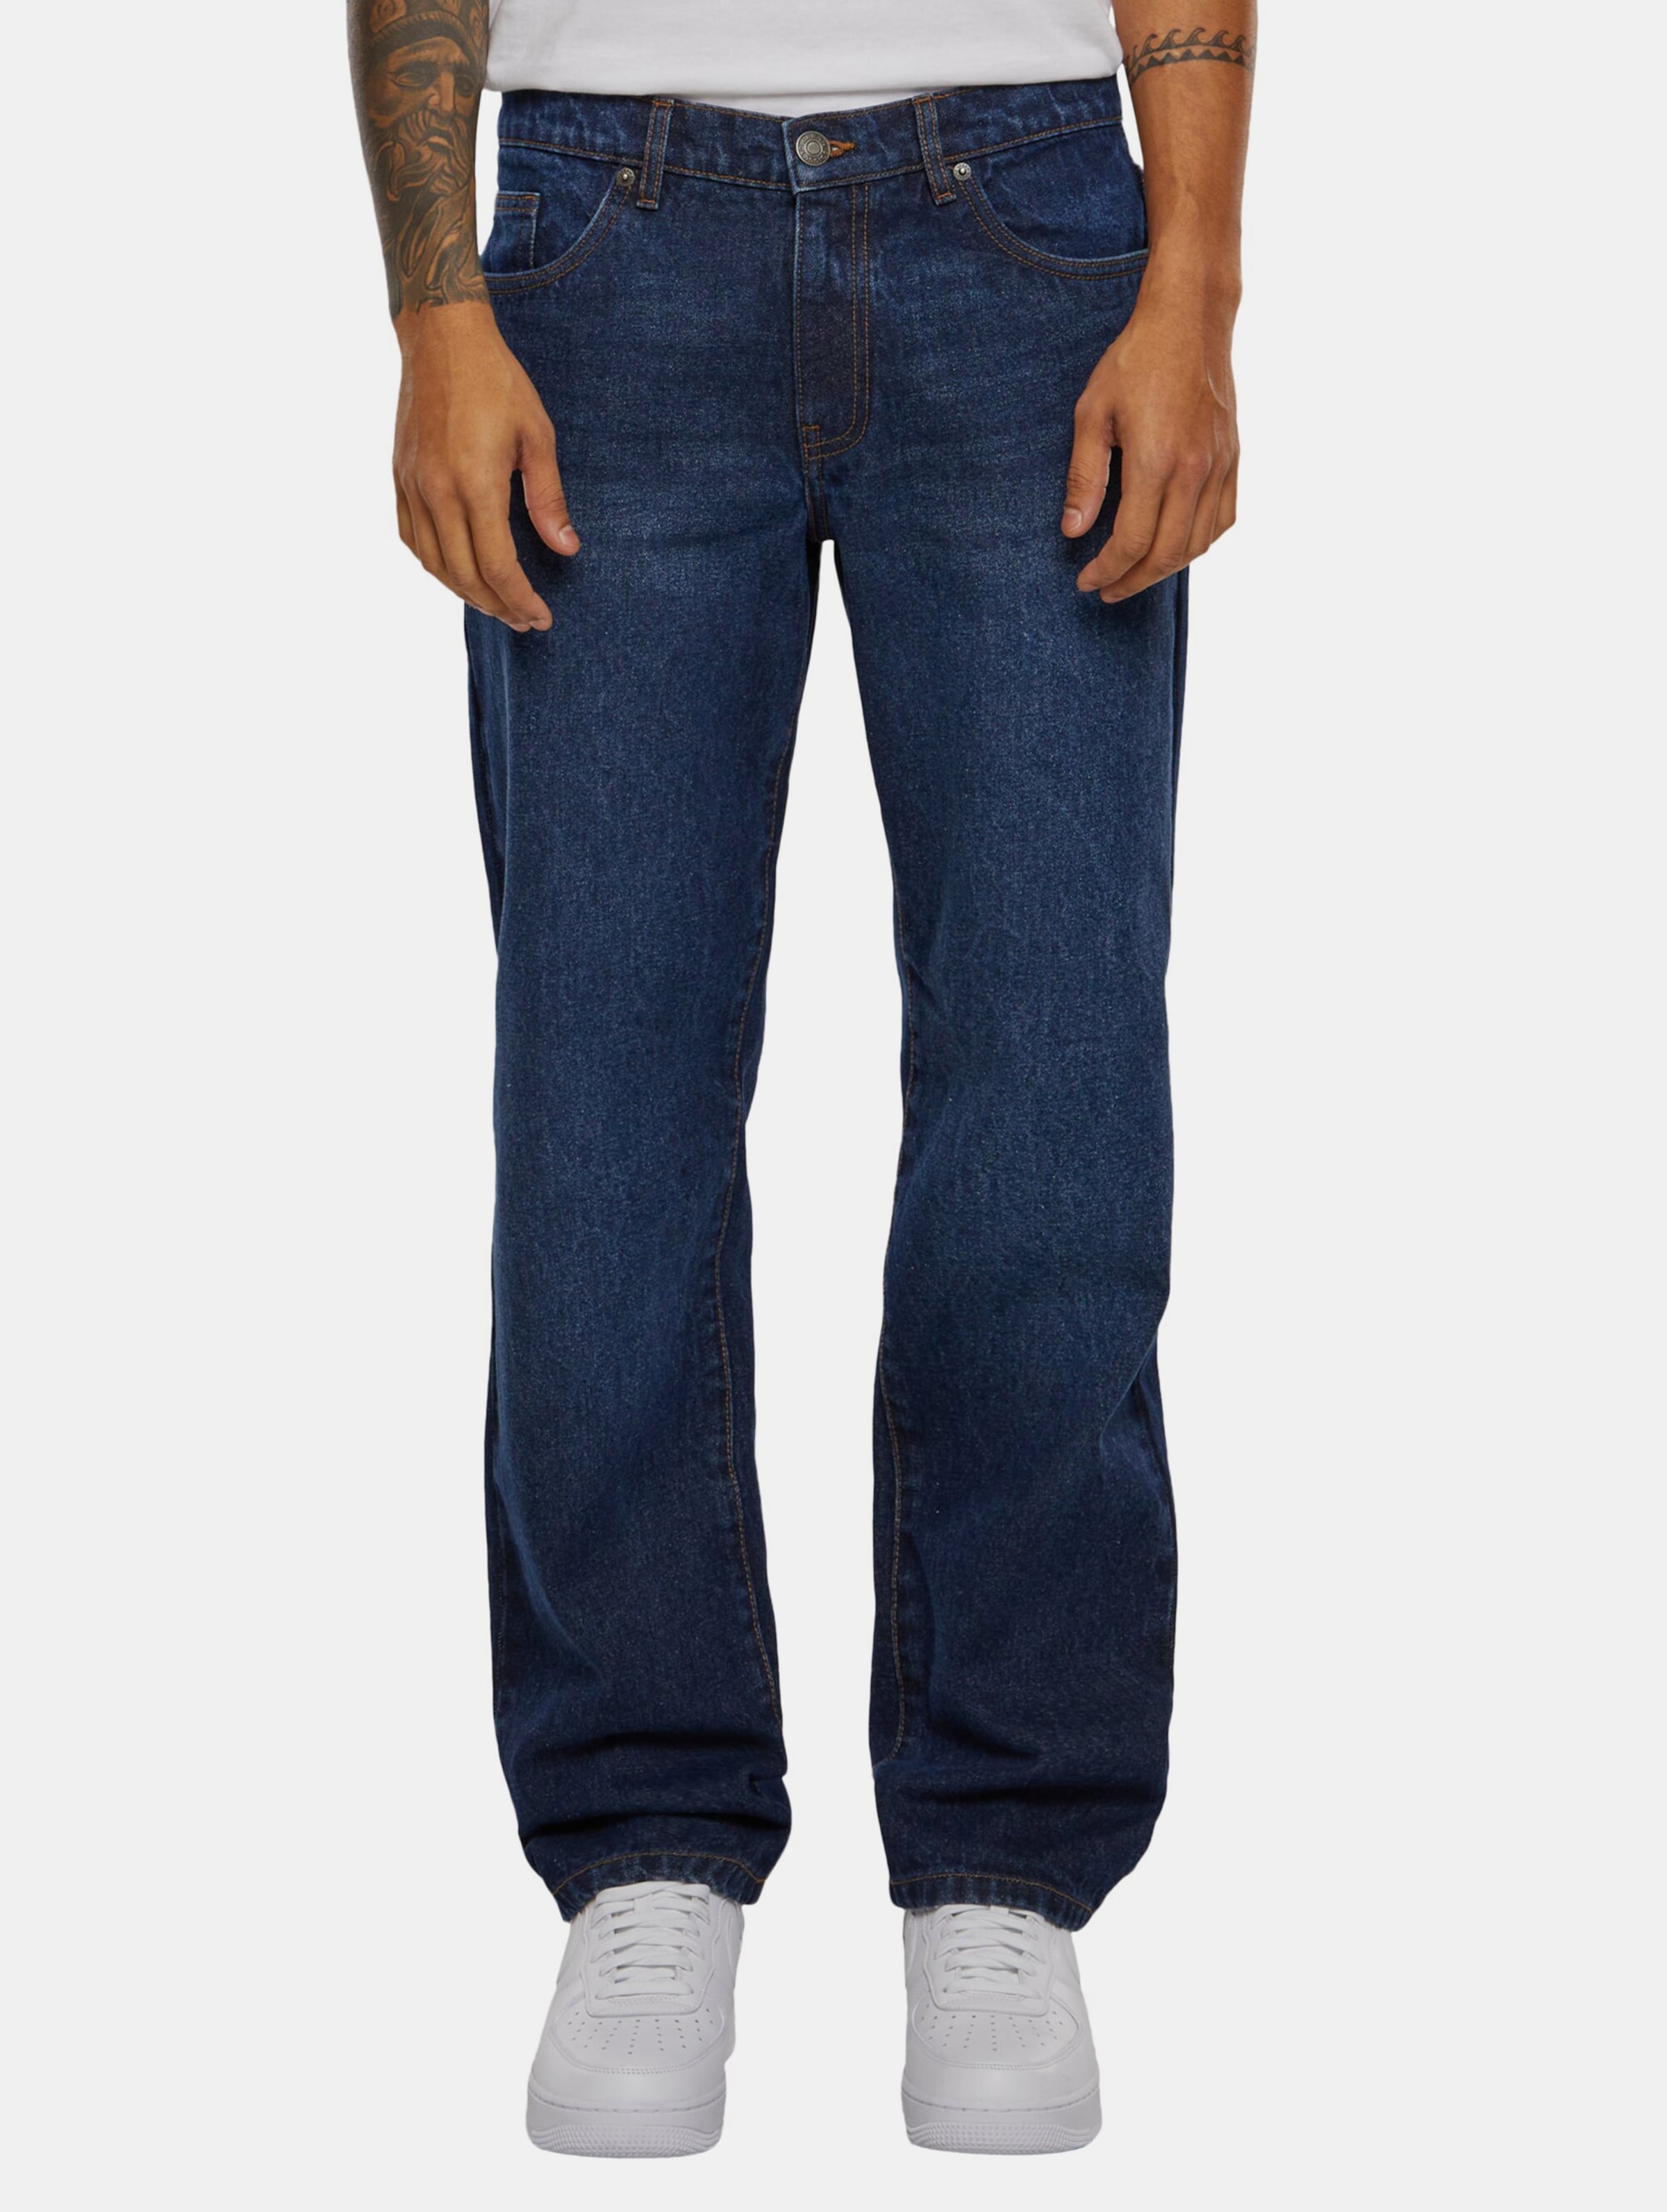 Urban Classics - Heavy Ounce Jeans Broek rechte pijpen - Taille, 34 inch - Blauw